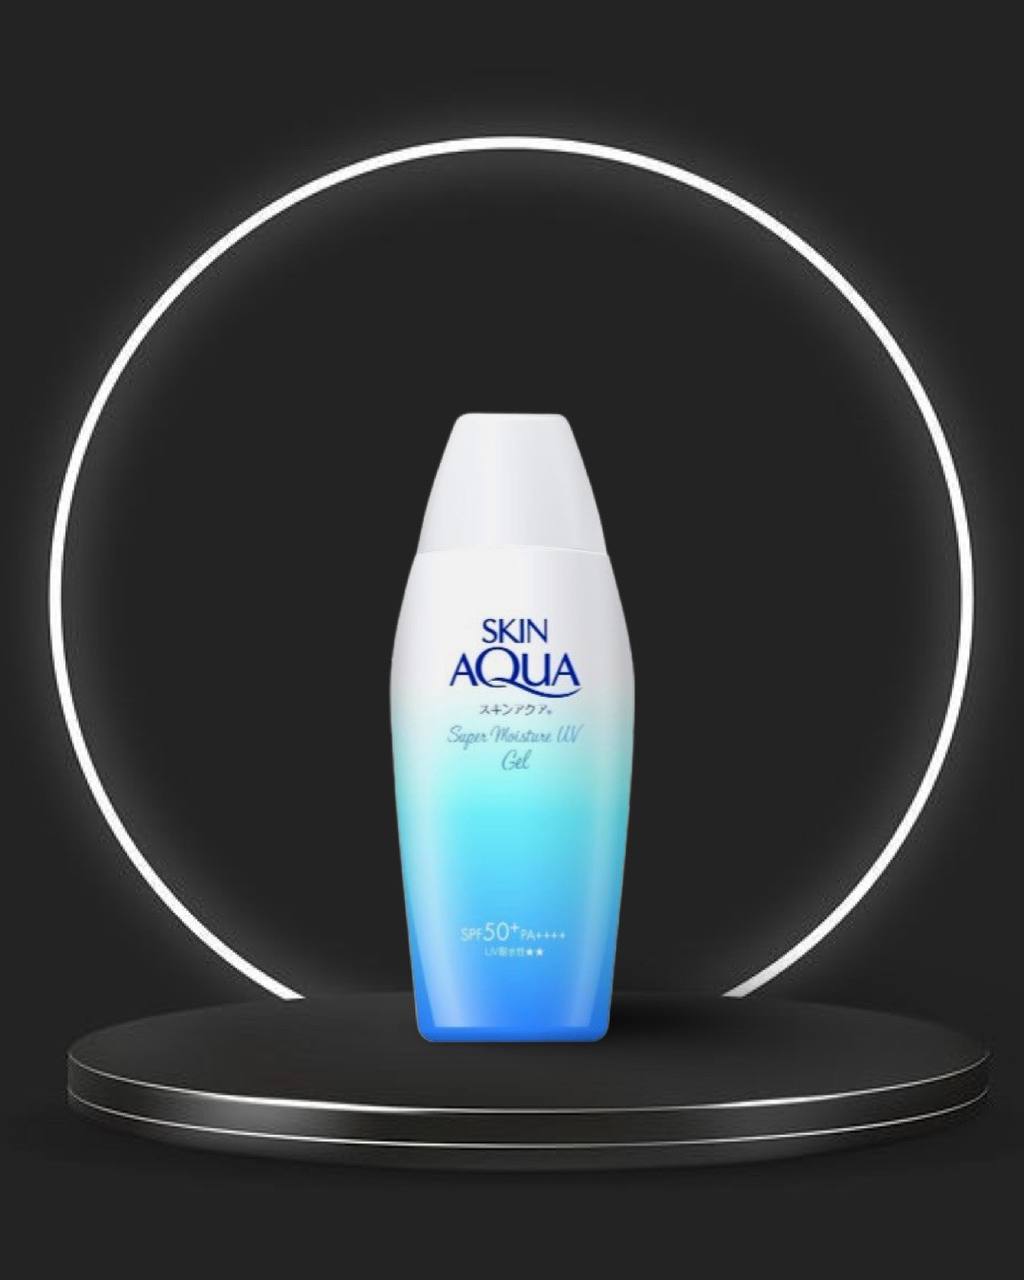 Skin Aqua UV Super Moisture Gel SPF 50 Sunscreen Lotion 110g (New Version)